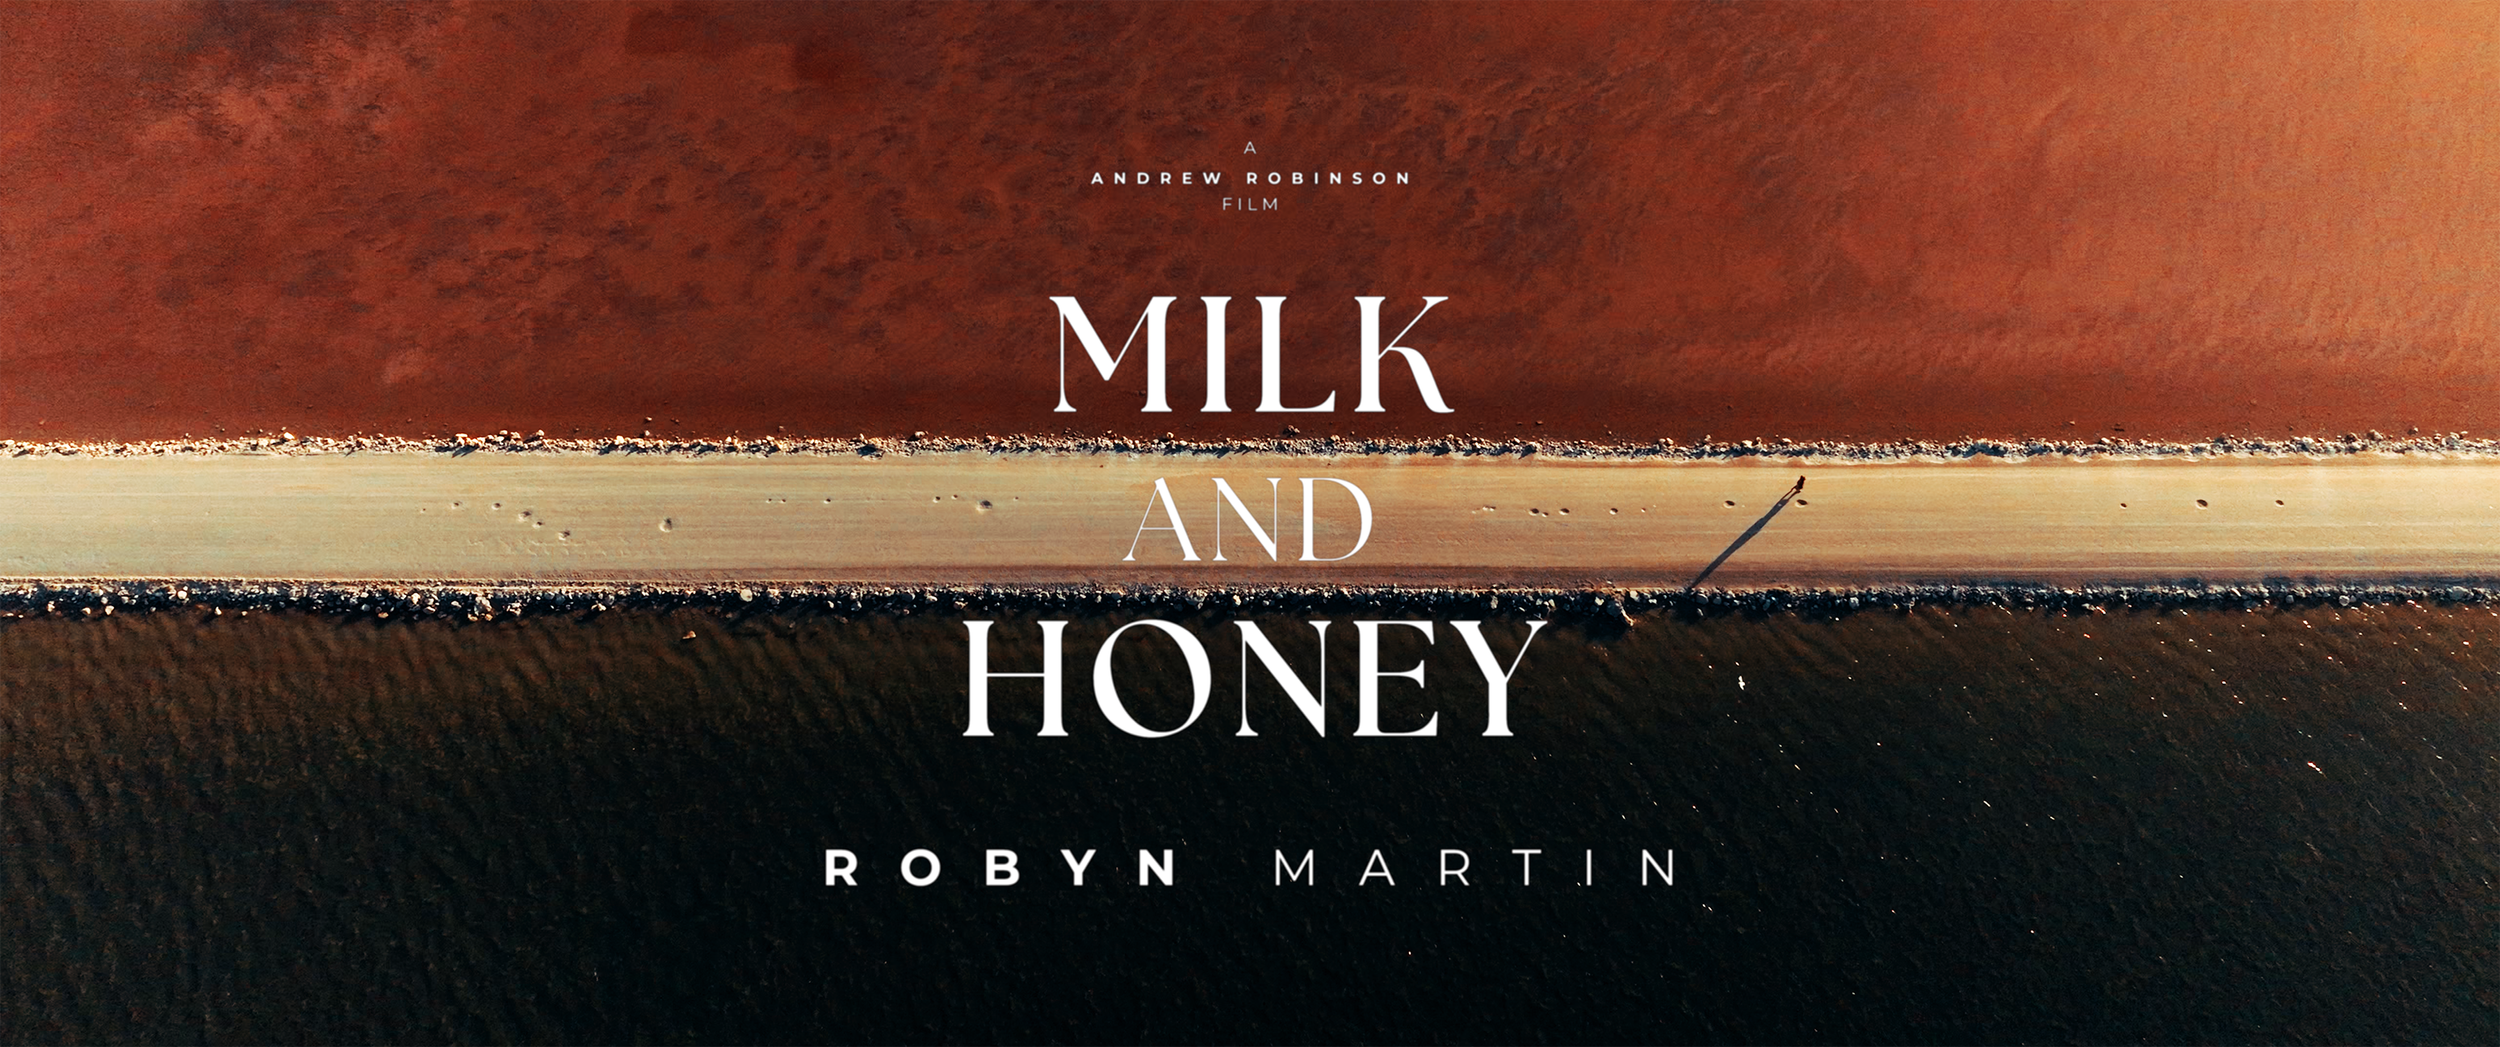 ROBYN MARTIN - MILK AND HONEY